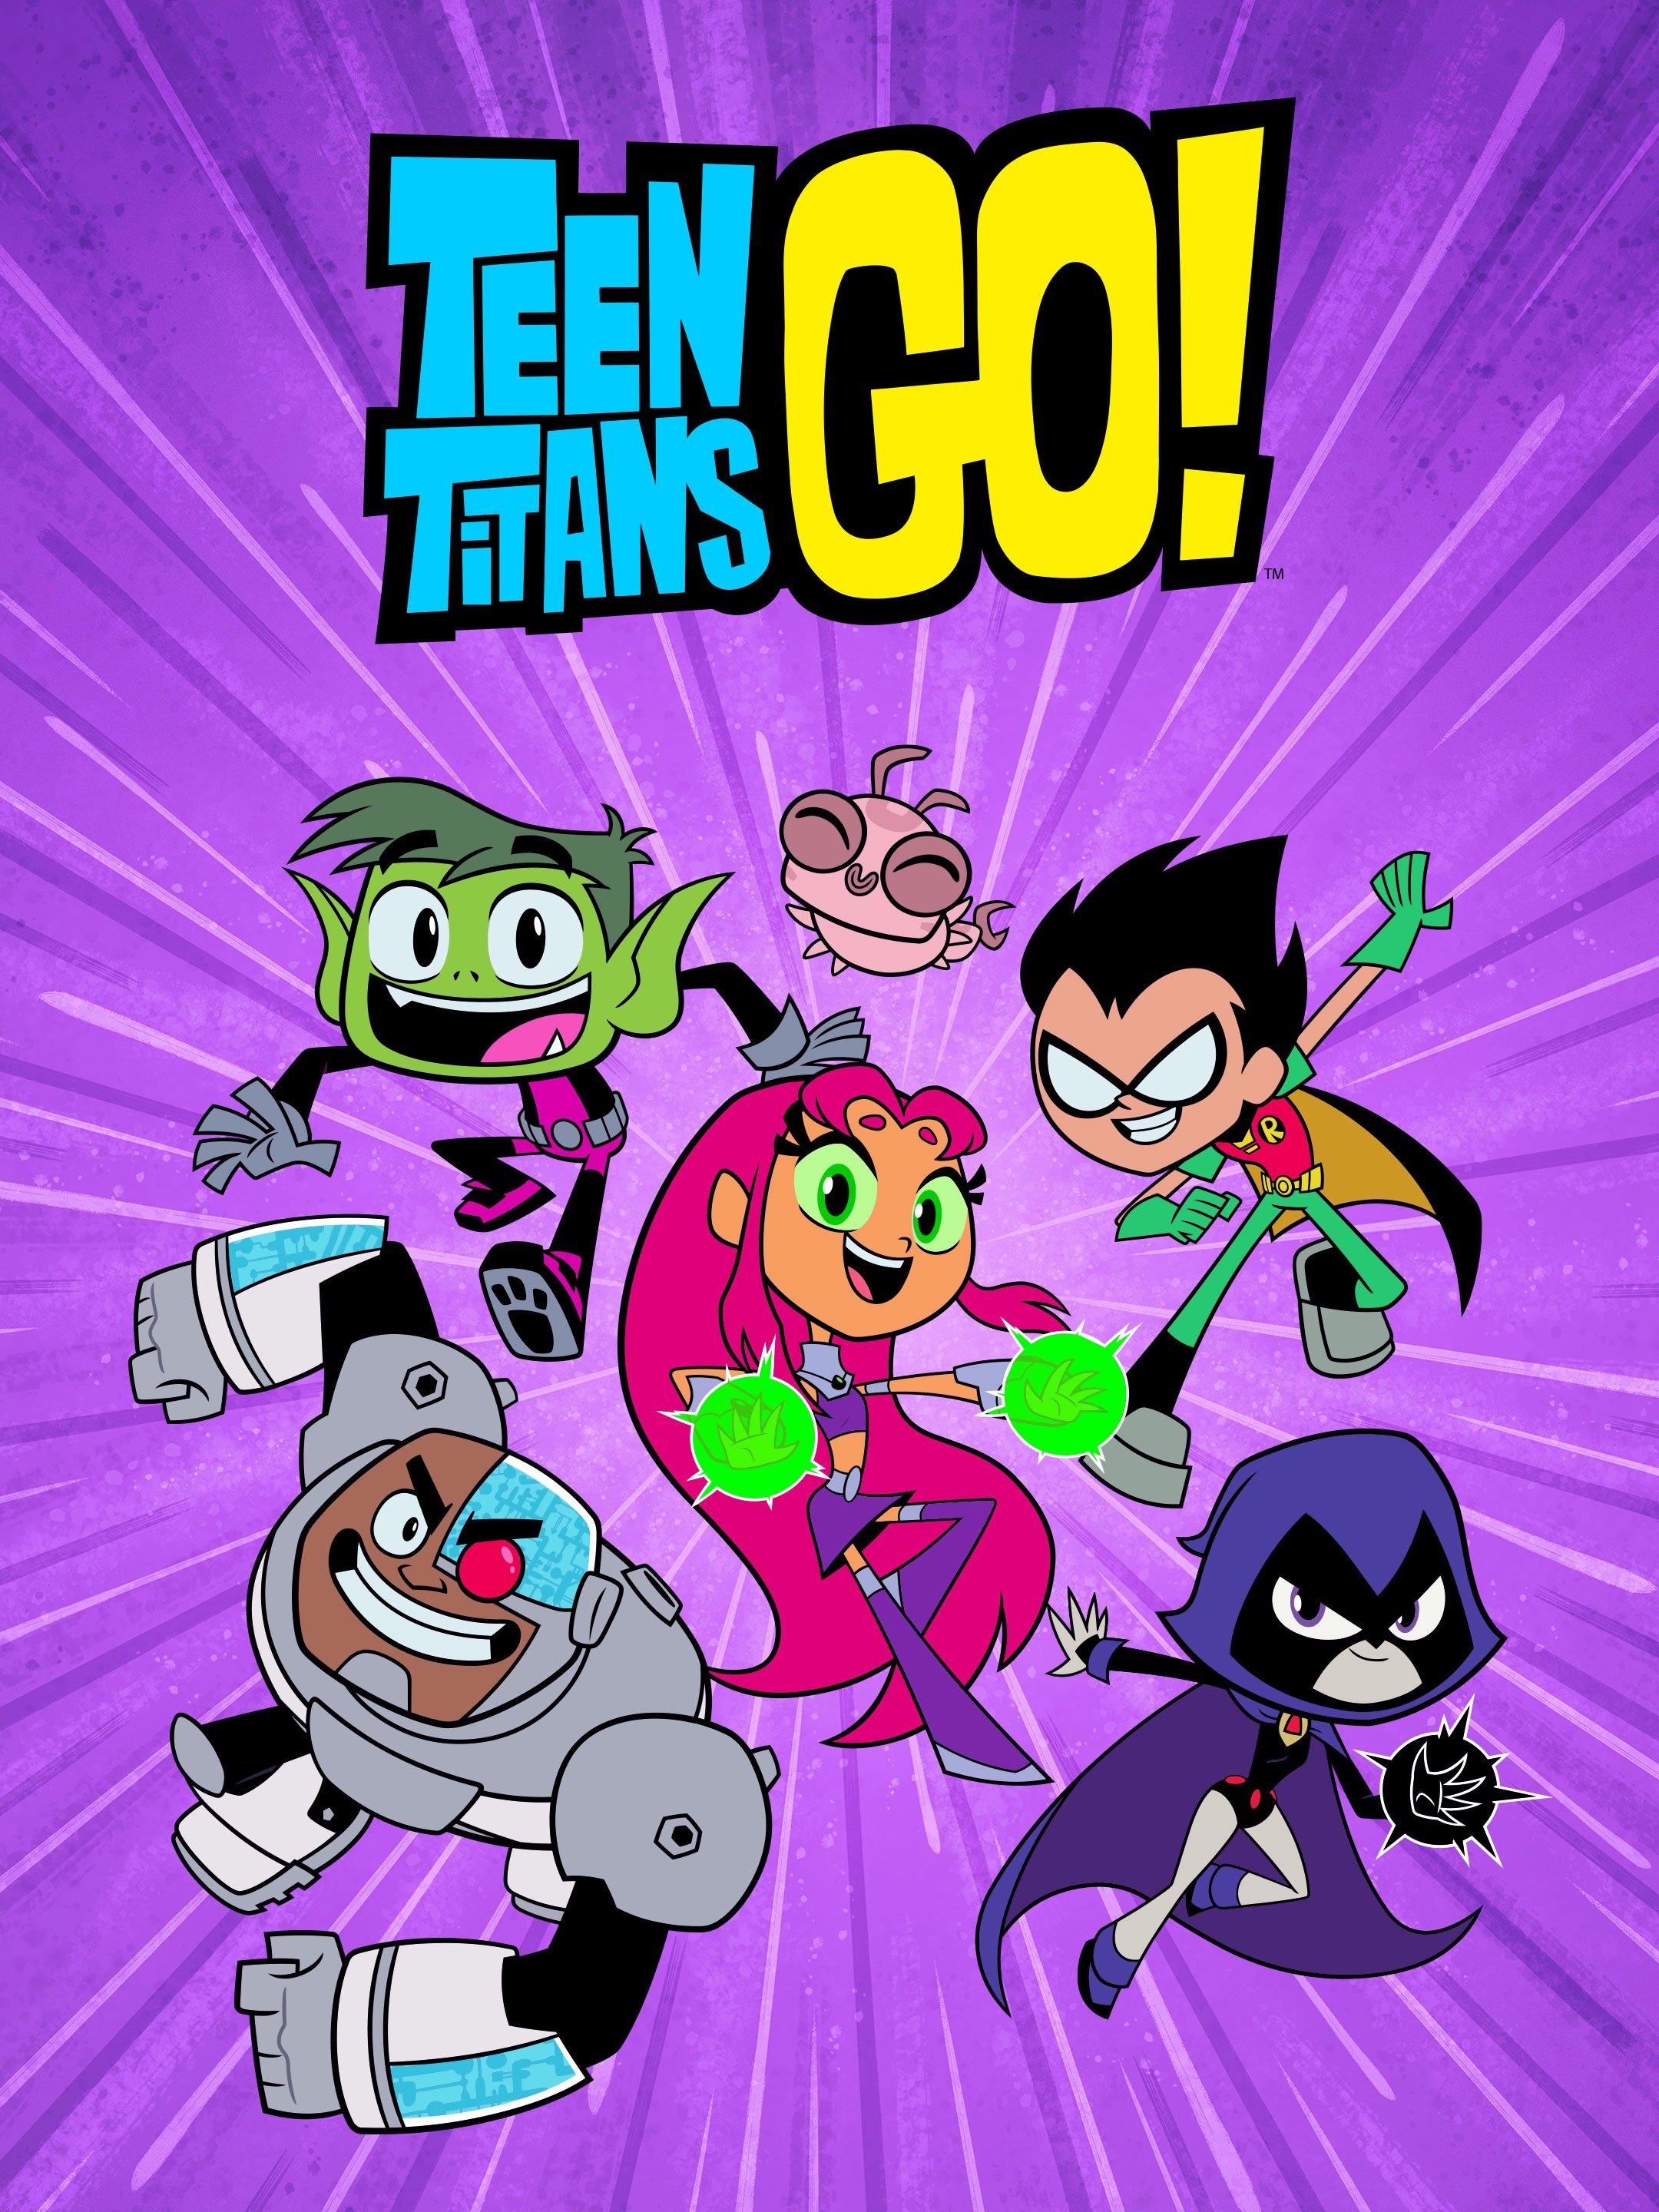 Teen Titans Go! (TV series), Warner Bros. Entertainment Wiki